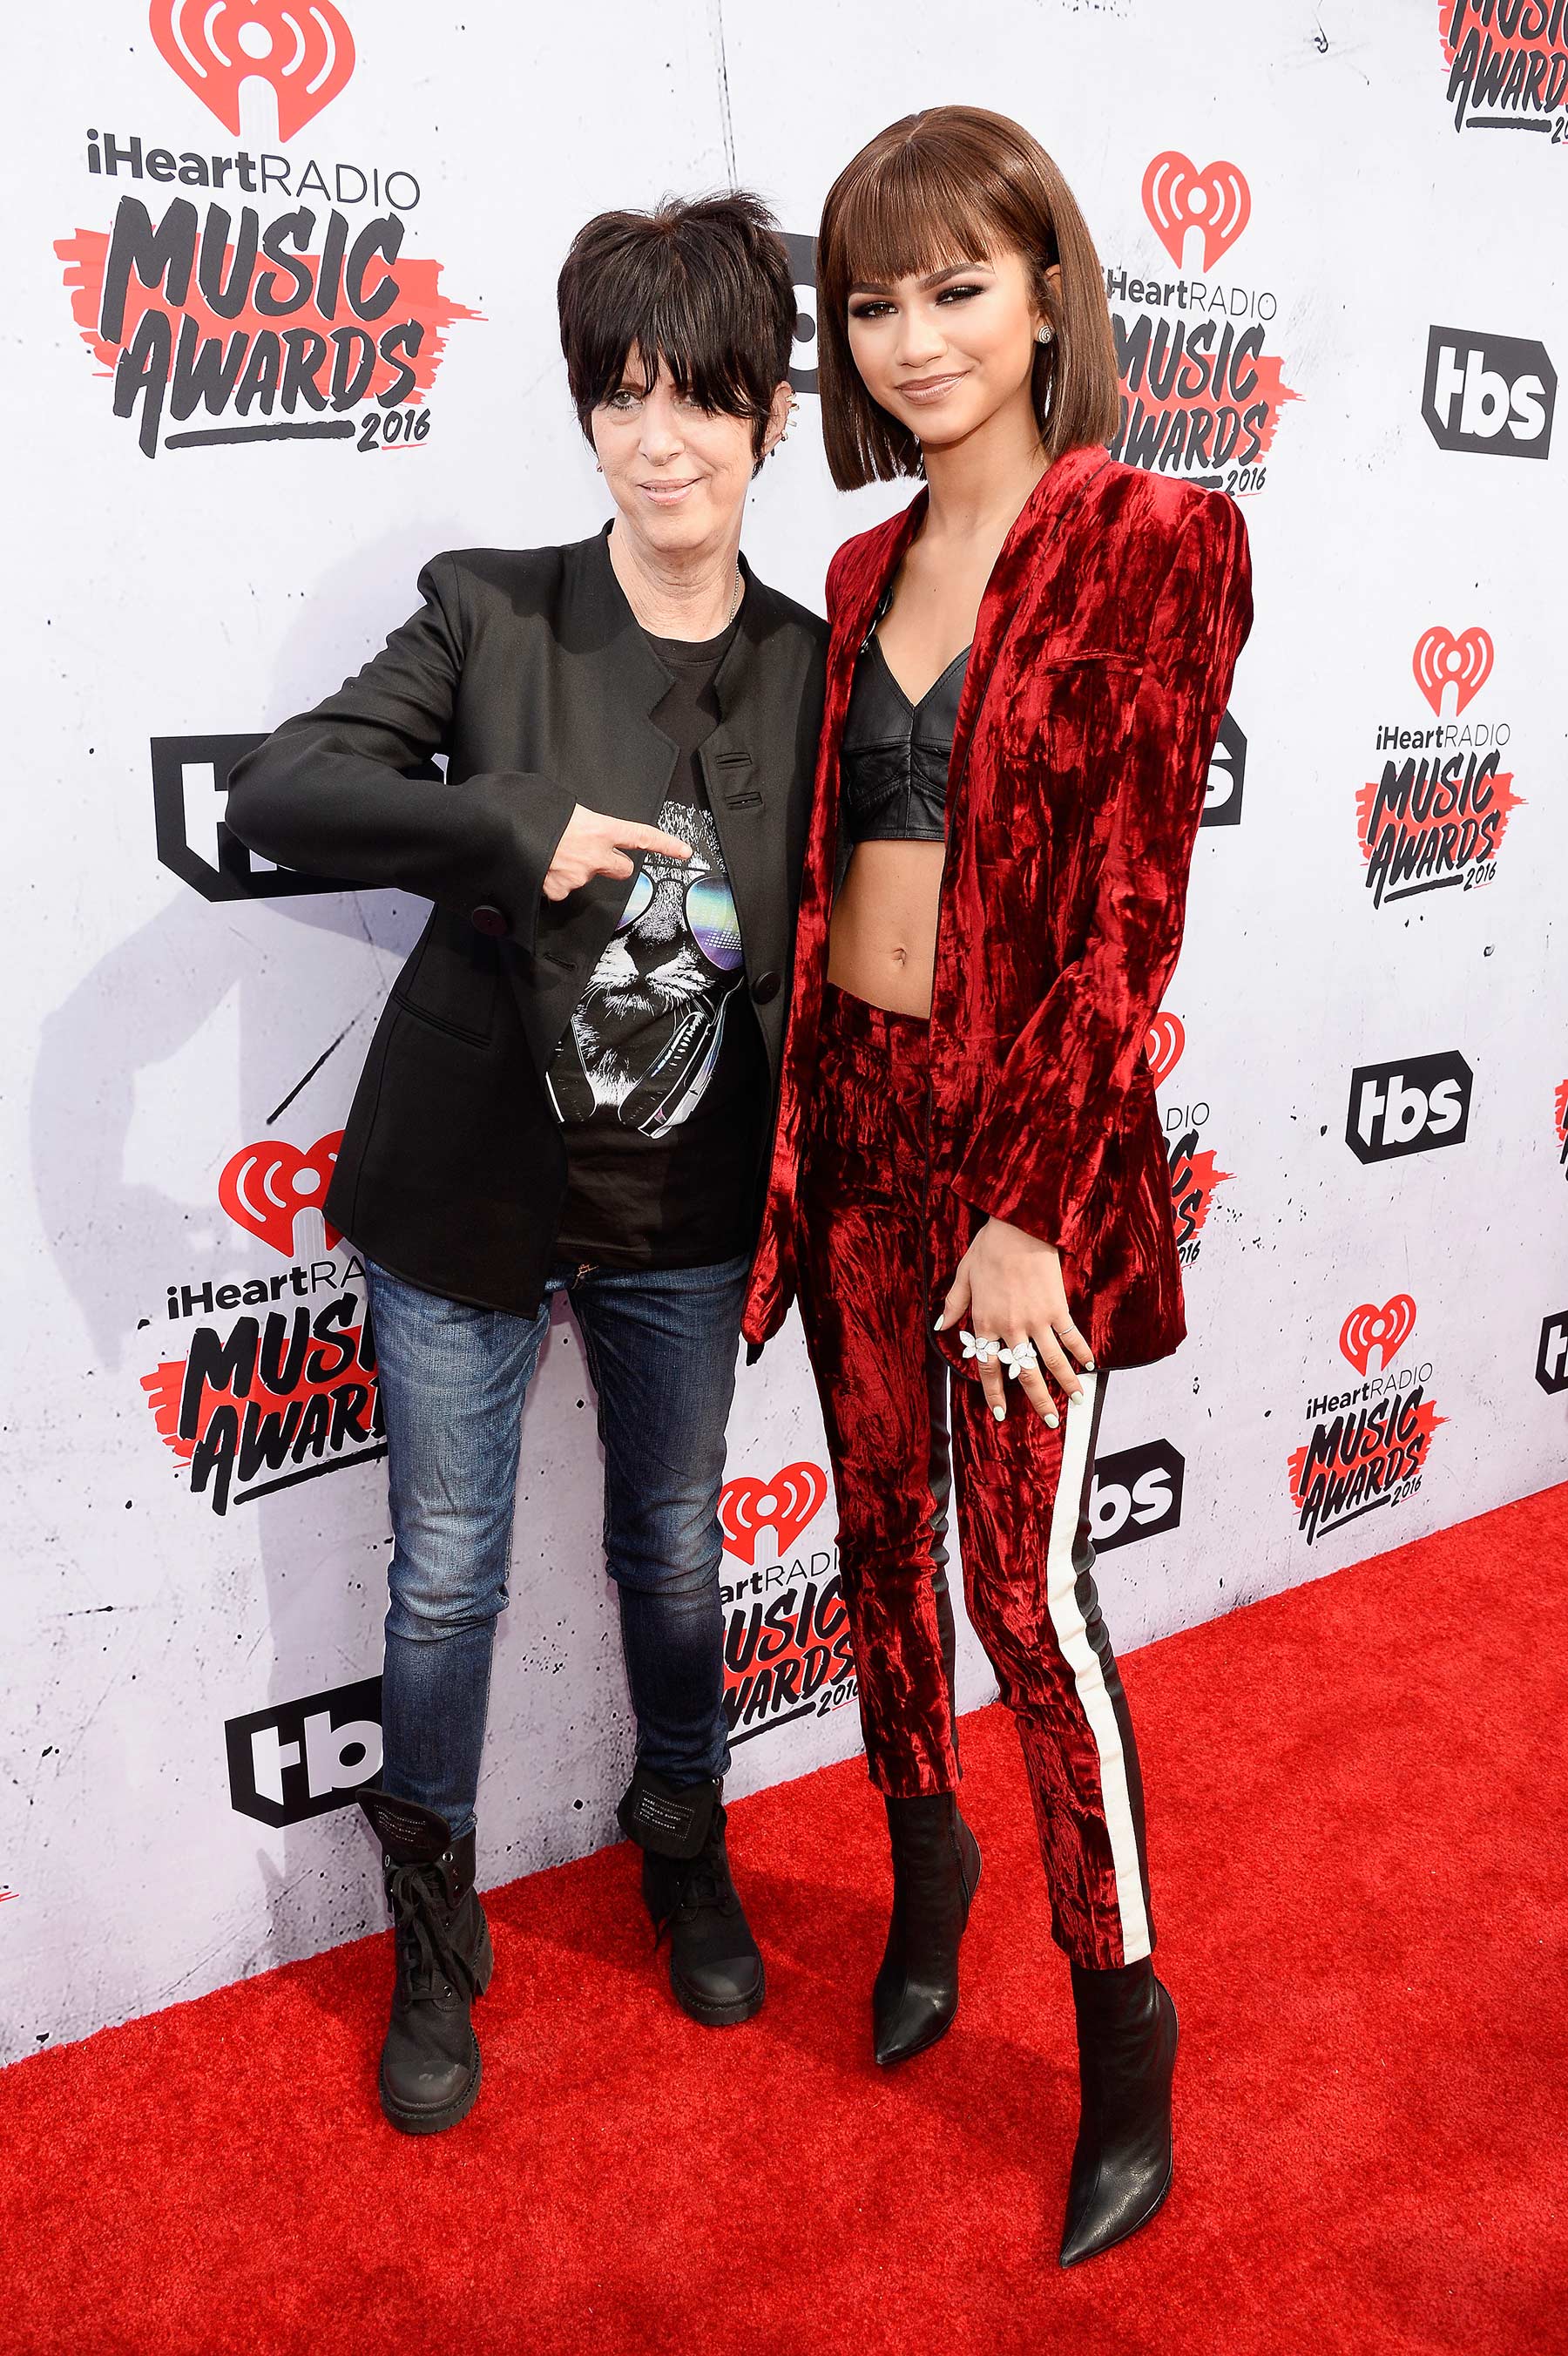 Zendaya Coleman attends 2016 iHeartRadio Music Awards